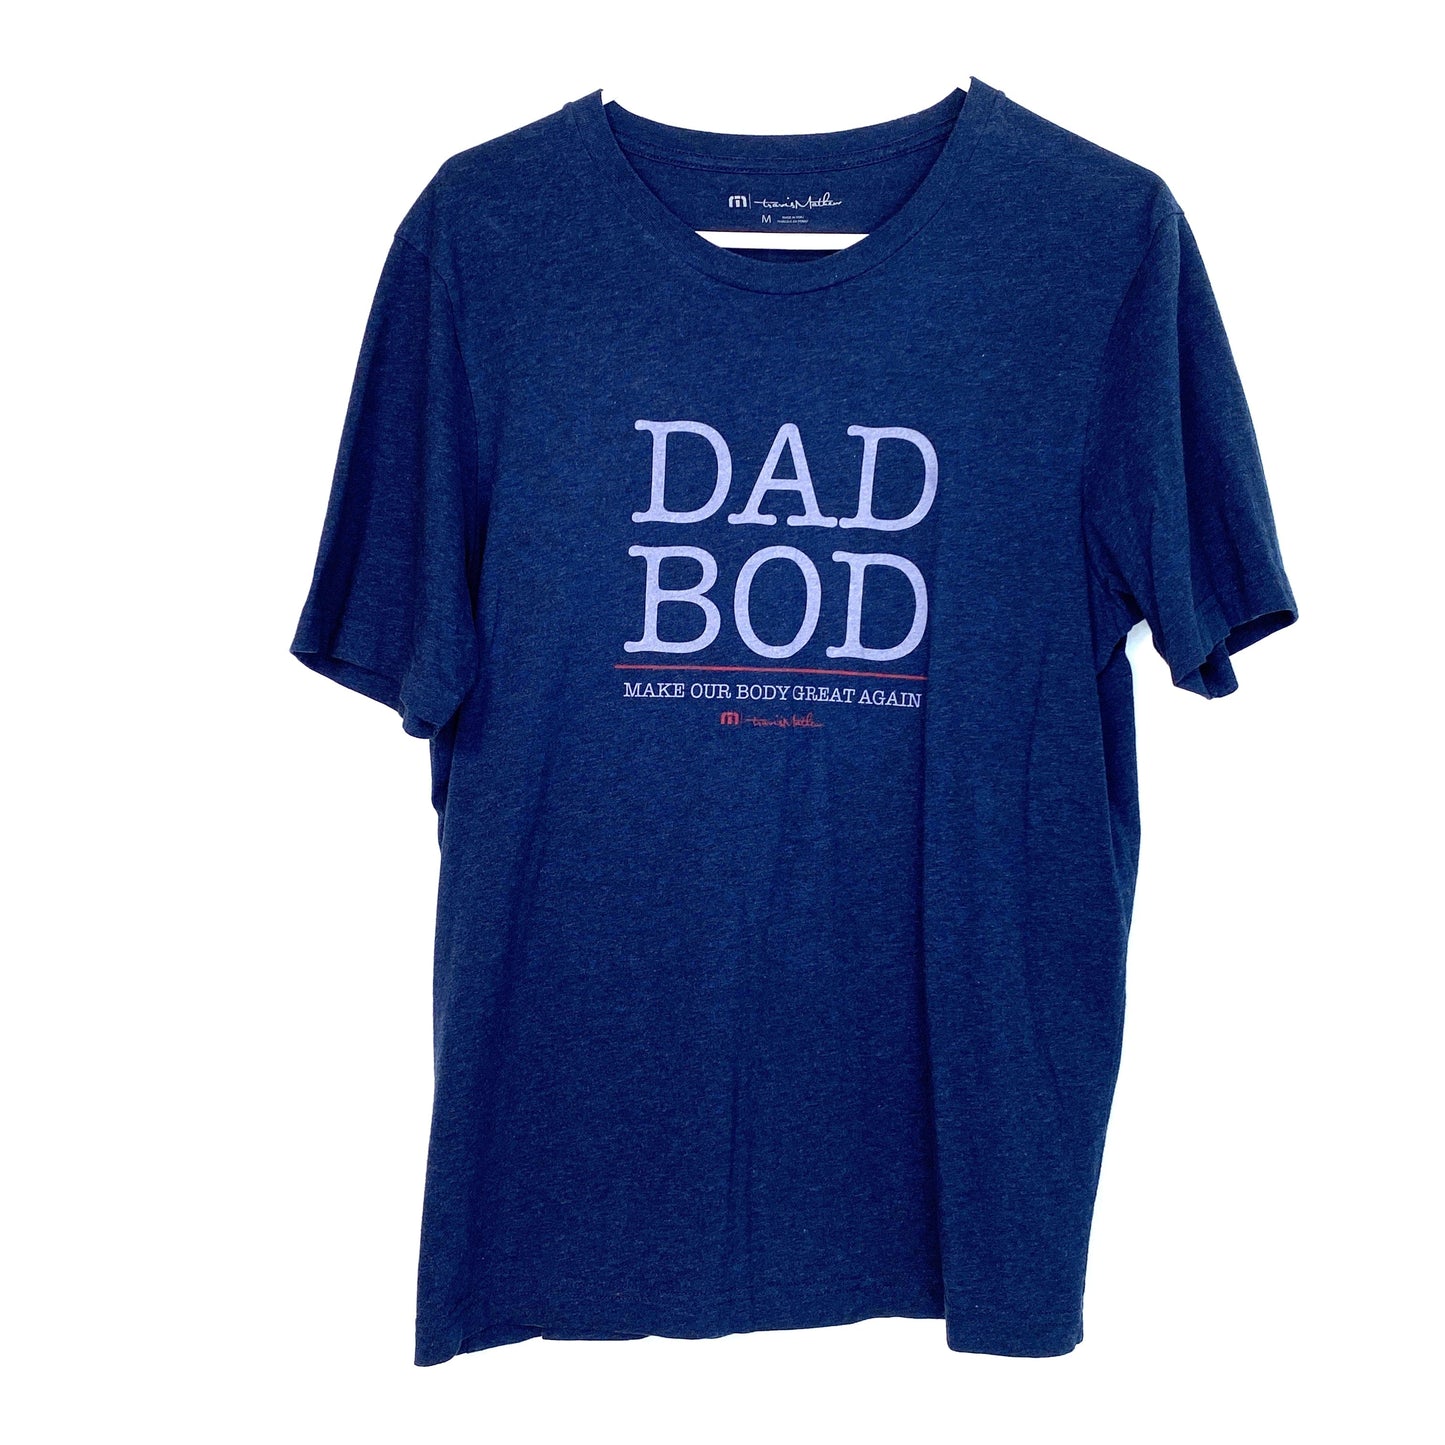 TravisMathew Mens Size Medium DAD BOD T-Shirt Short Sleeve